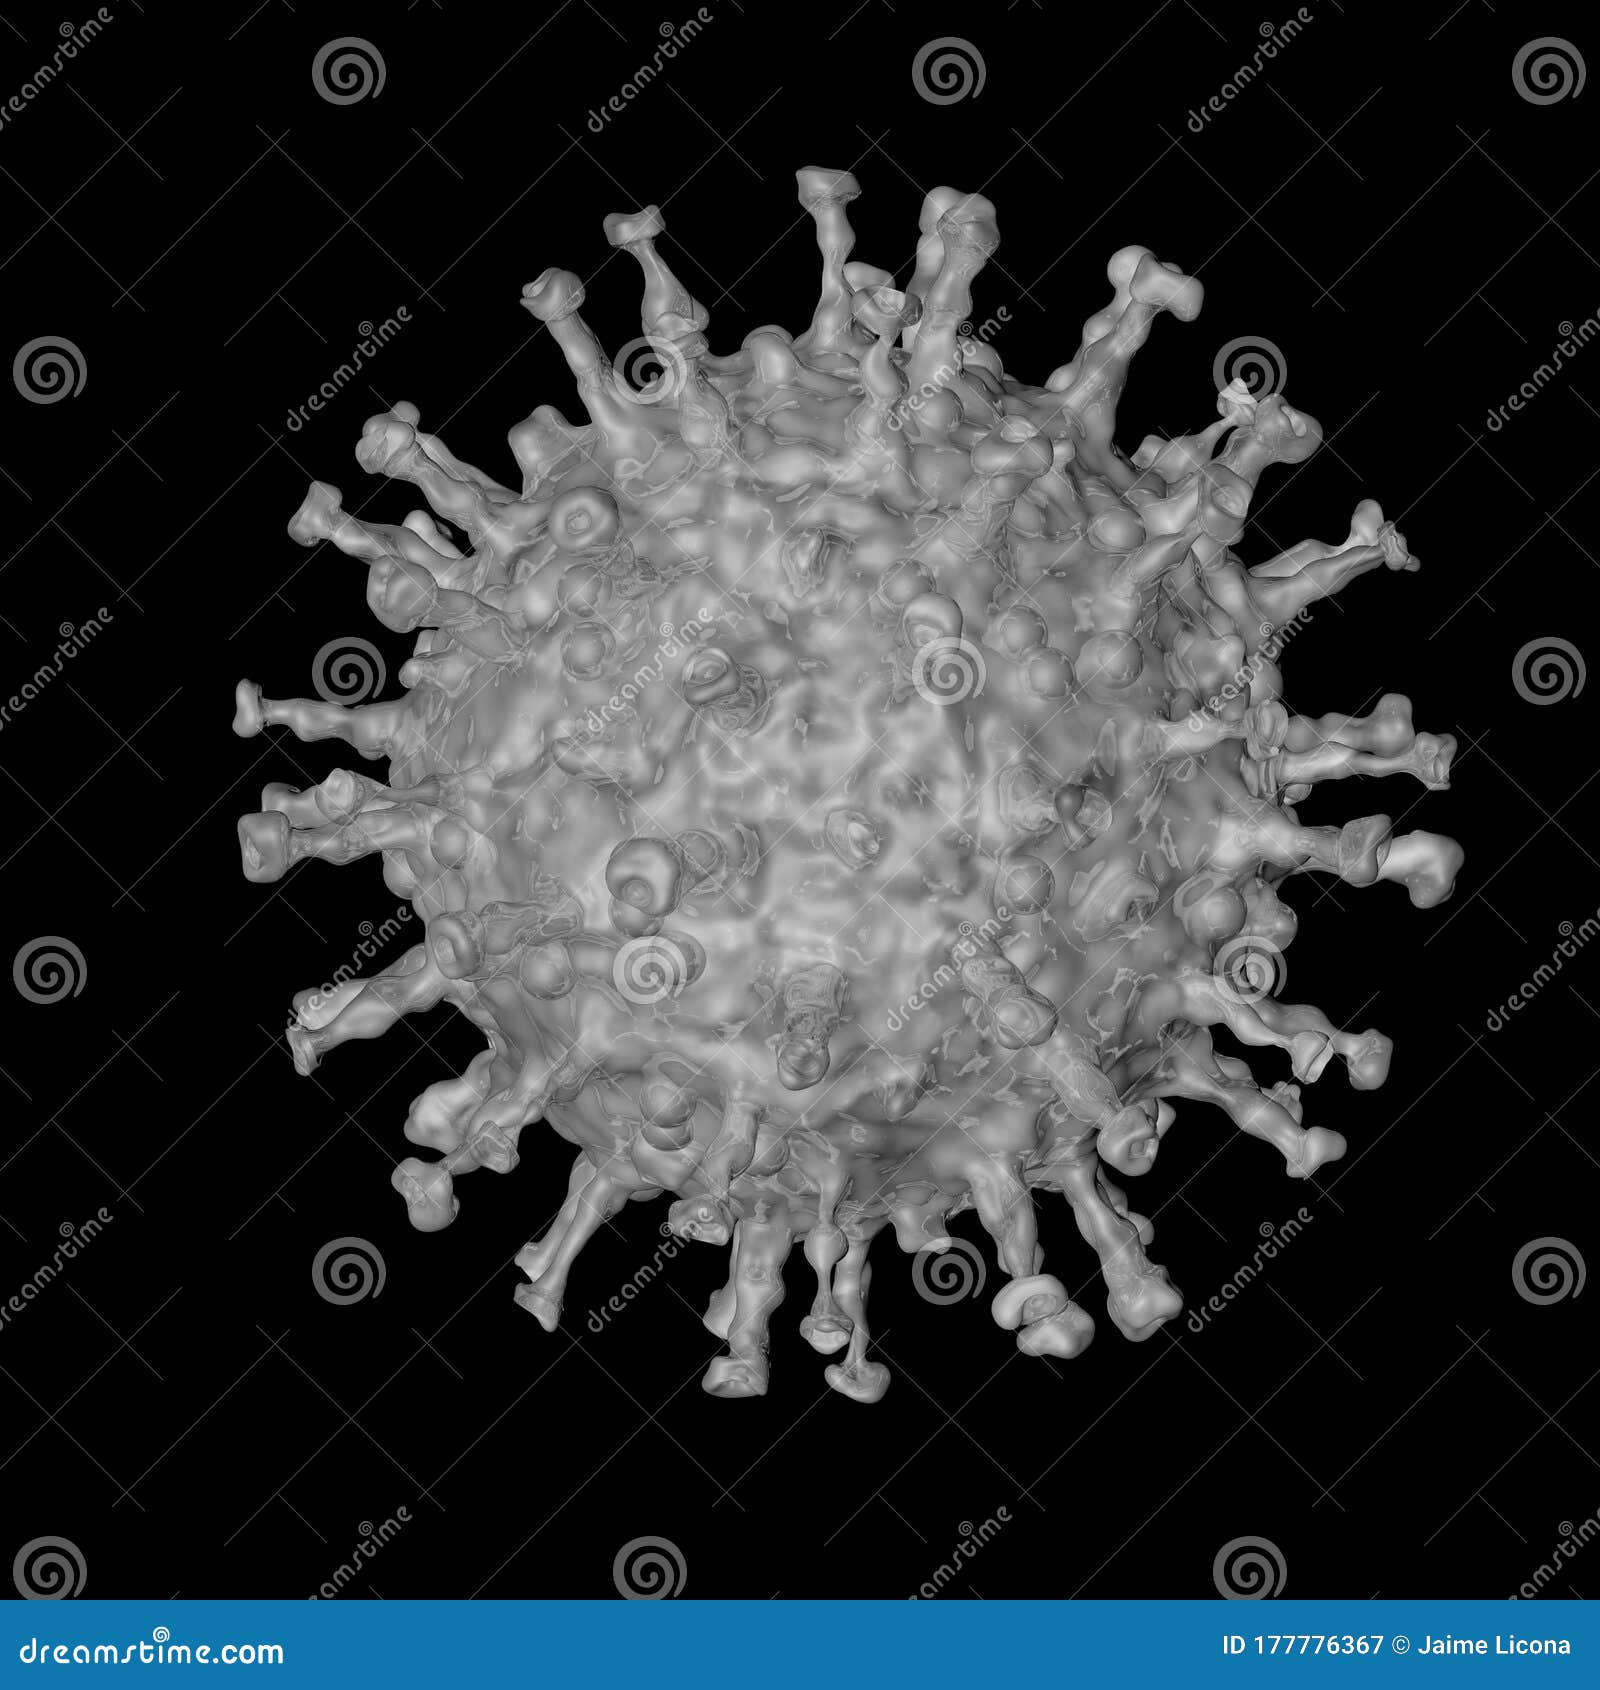 covid-19 coronavirus microscopic, virus with black background